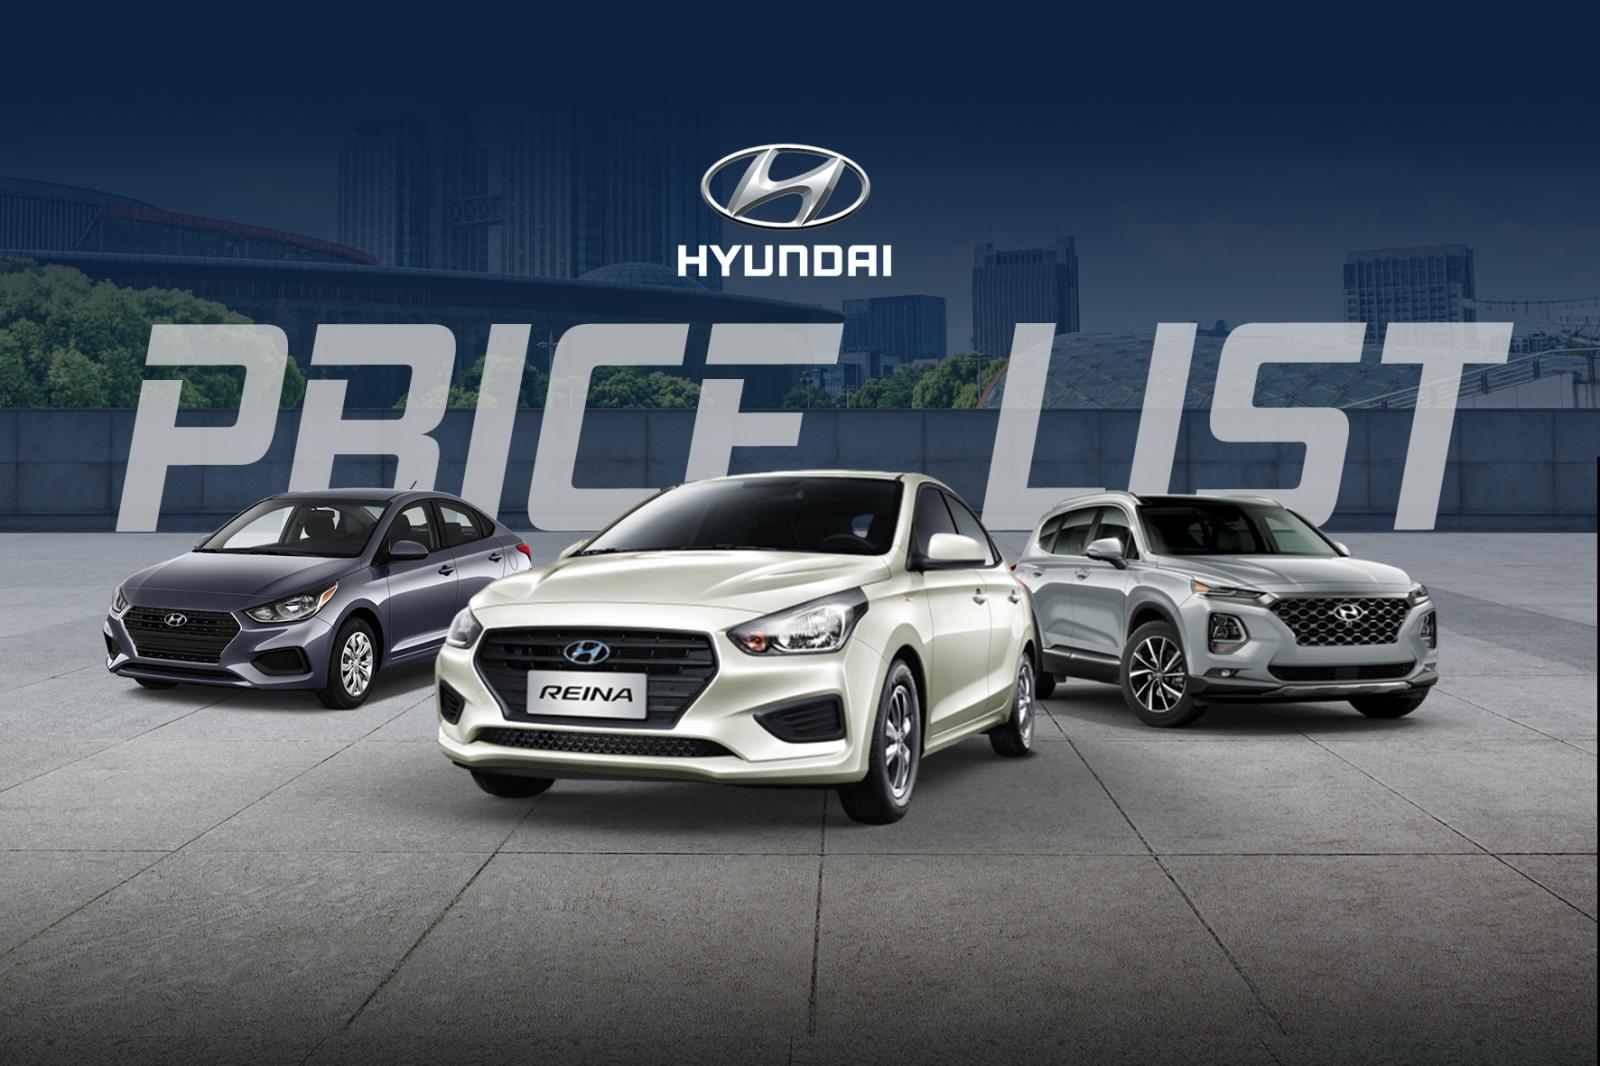 Hyundai Philippines Car Price List, Models & Dealerships